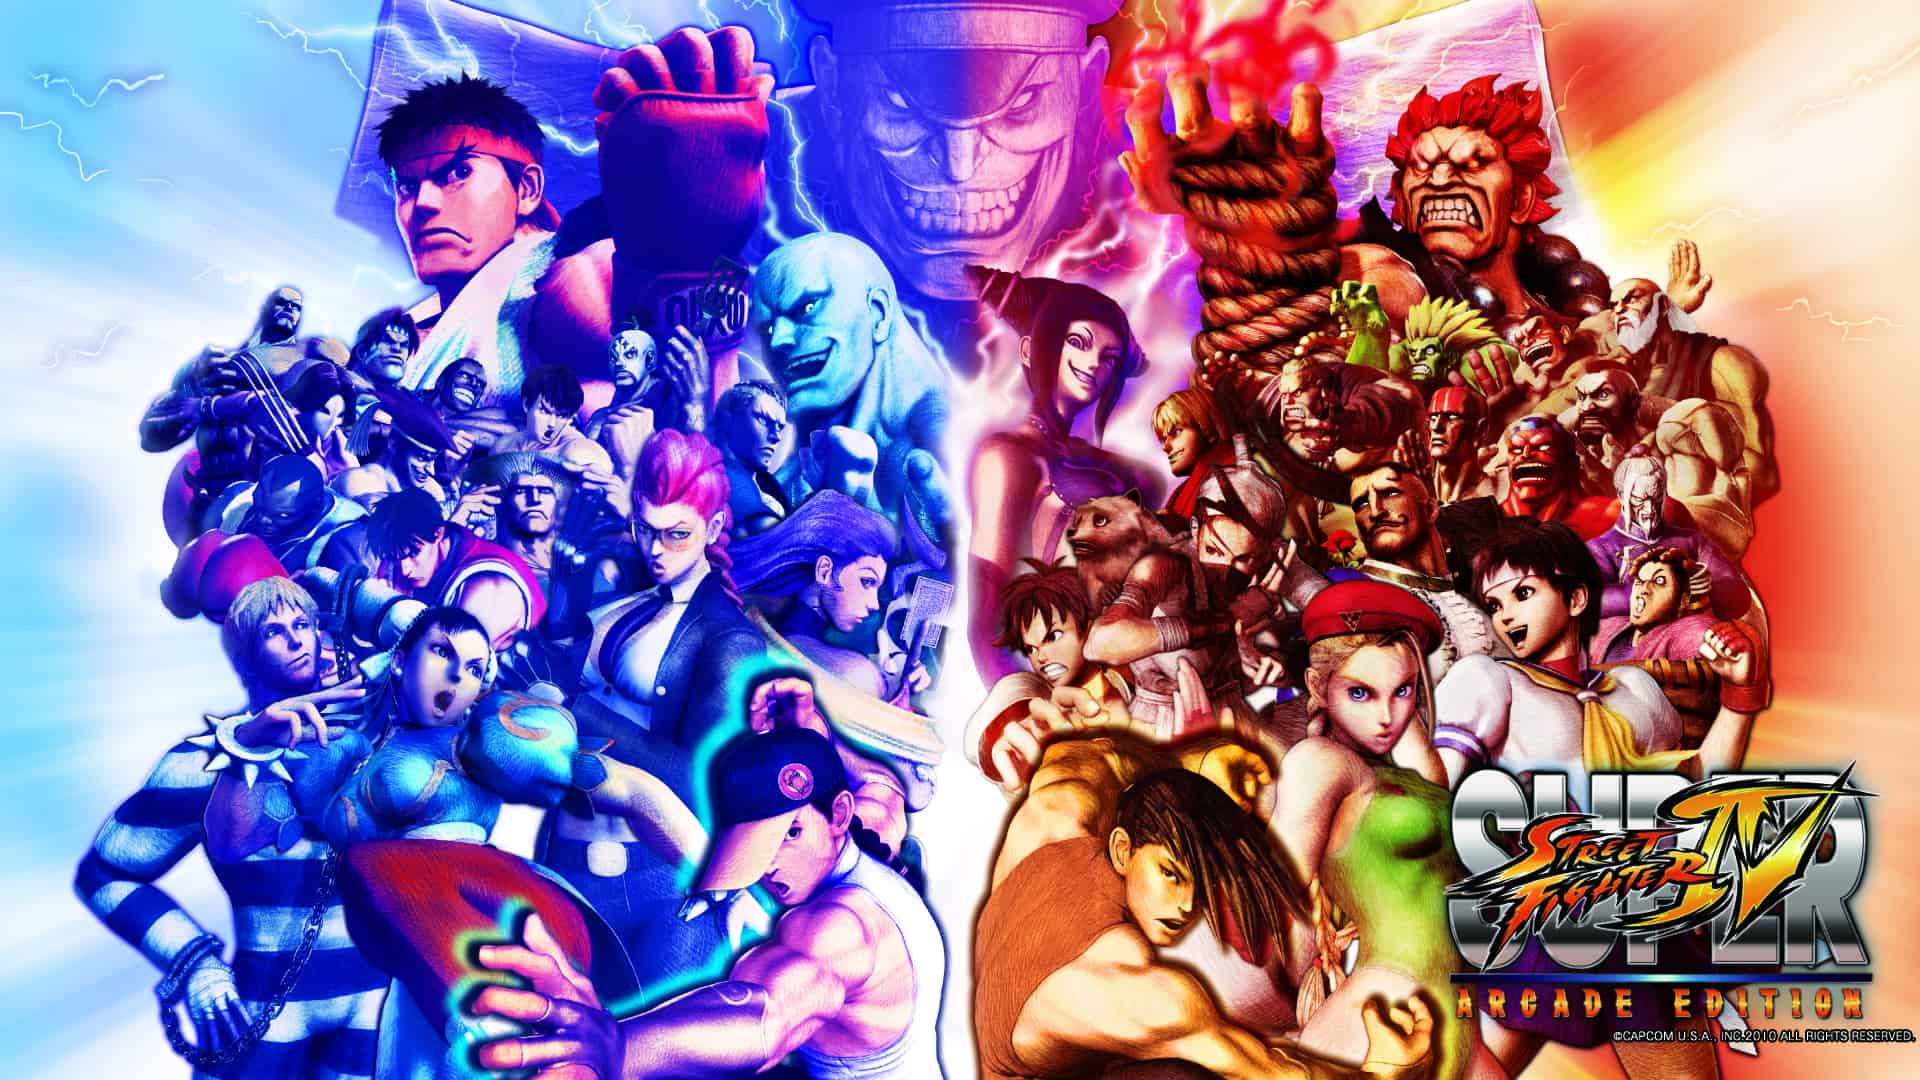 Best Fighting Games - Super Street Fighter IV- Arcade Edition